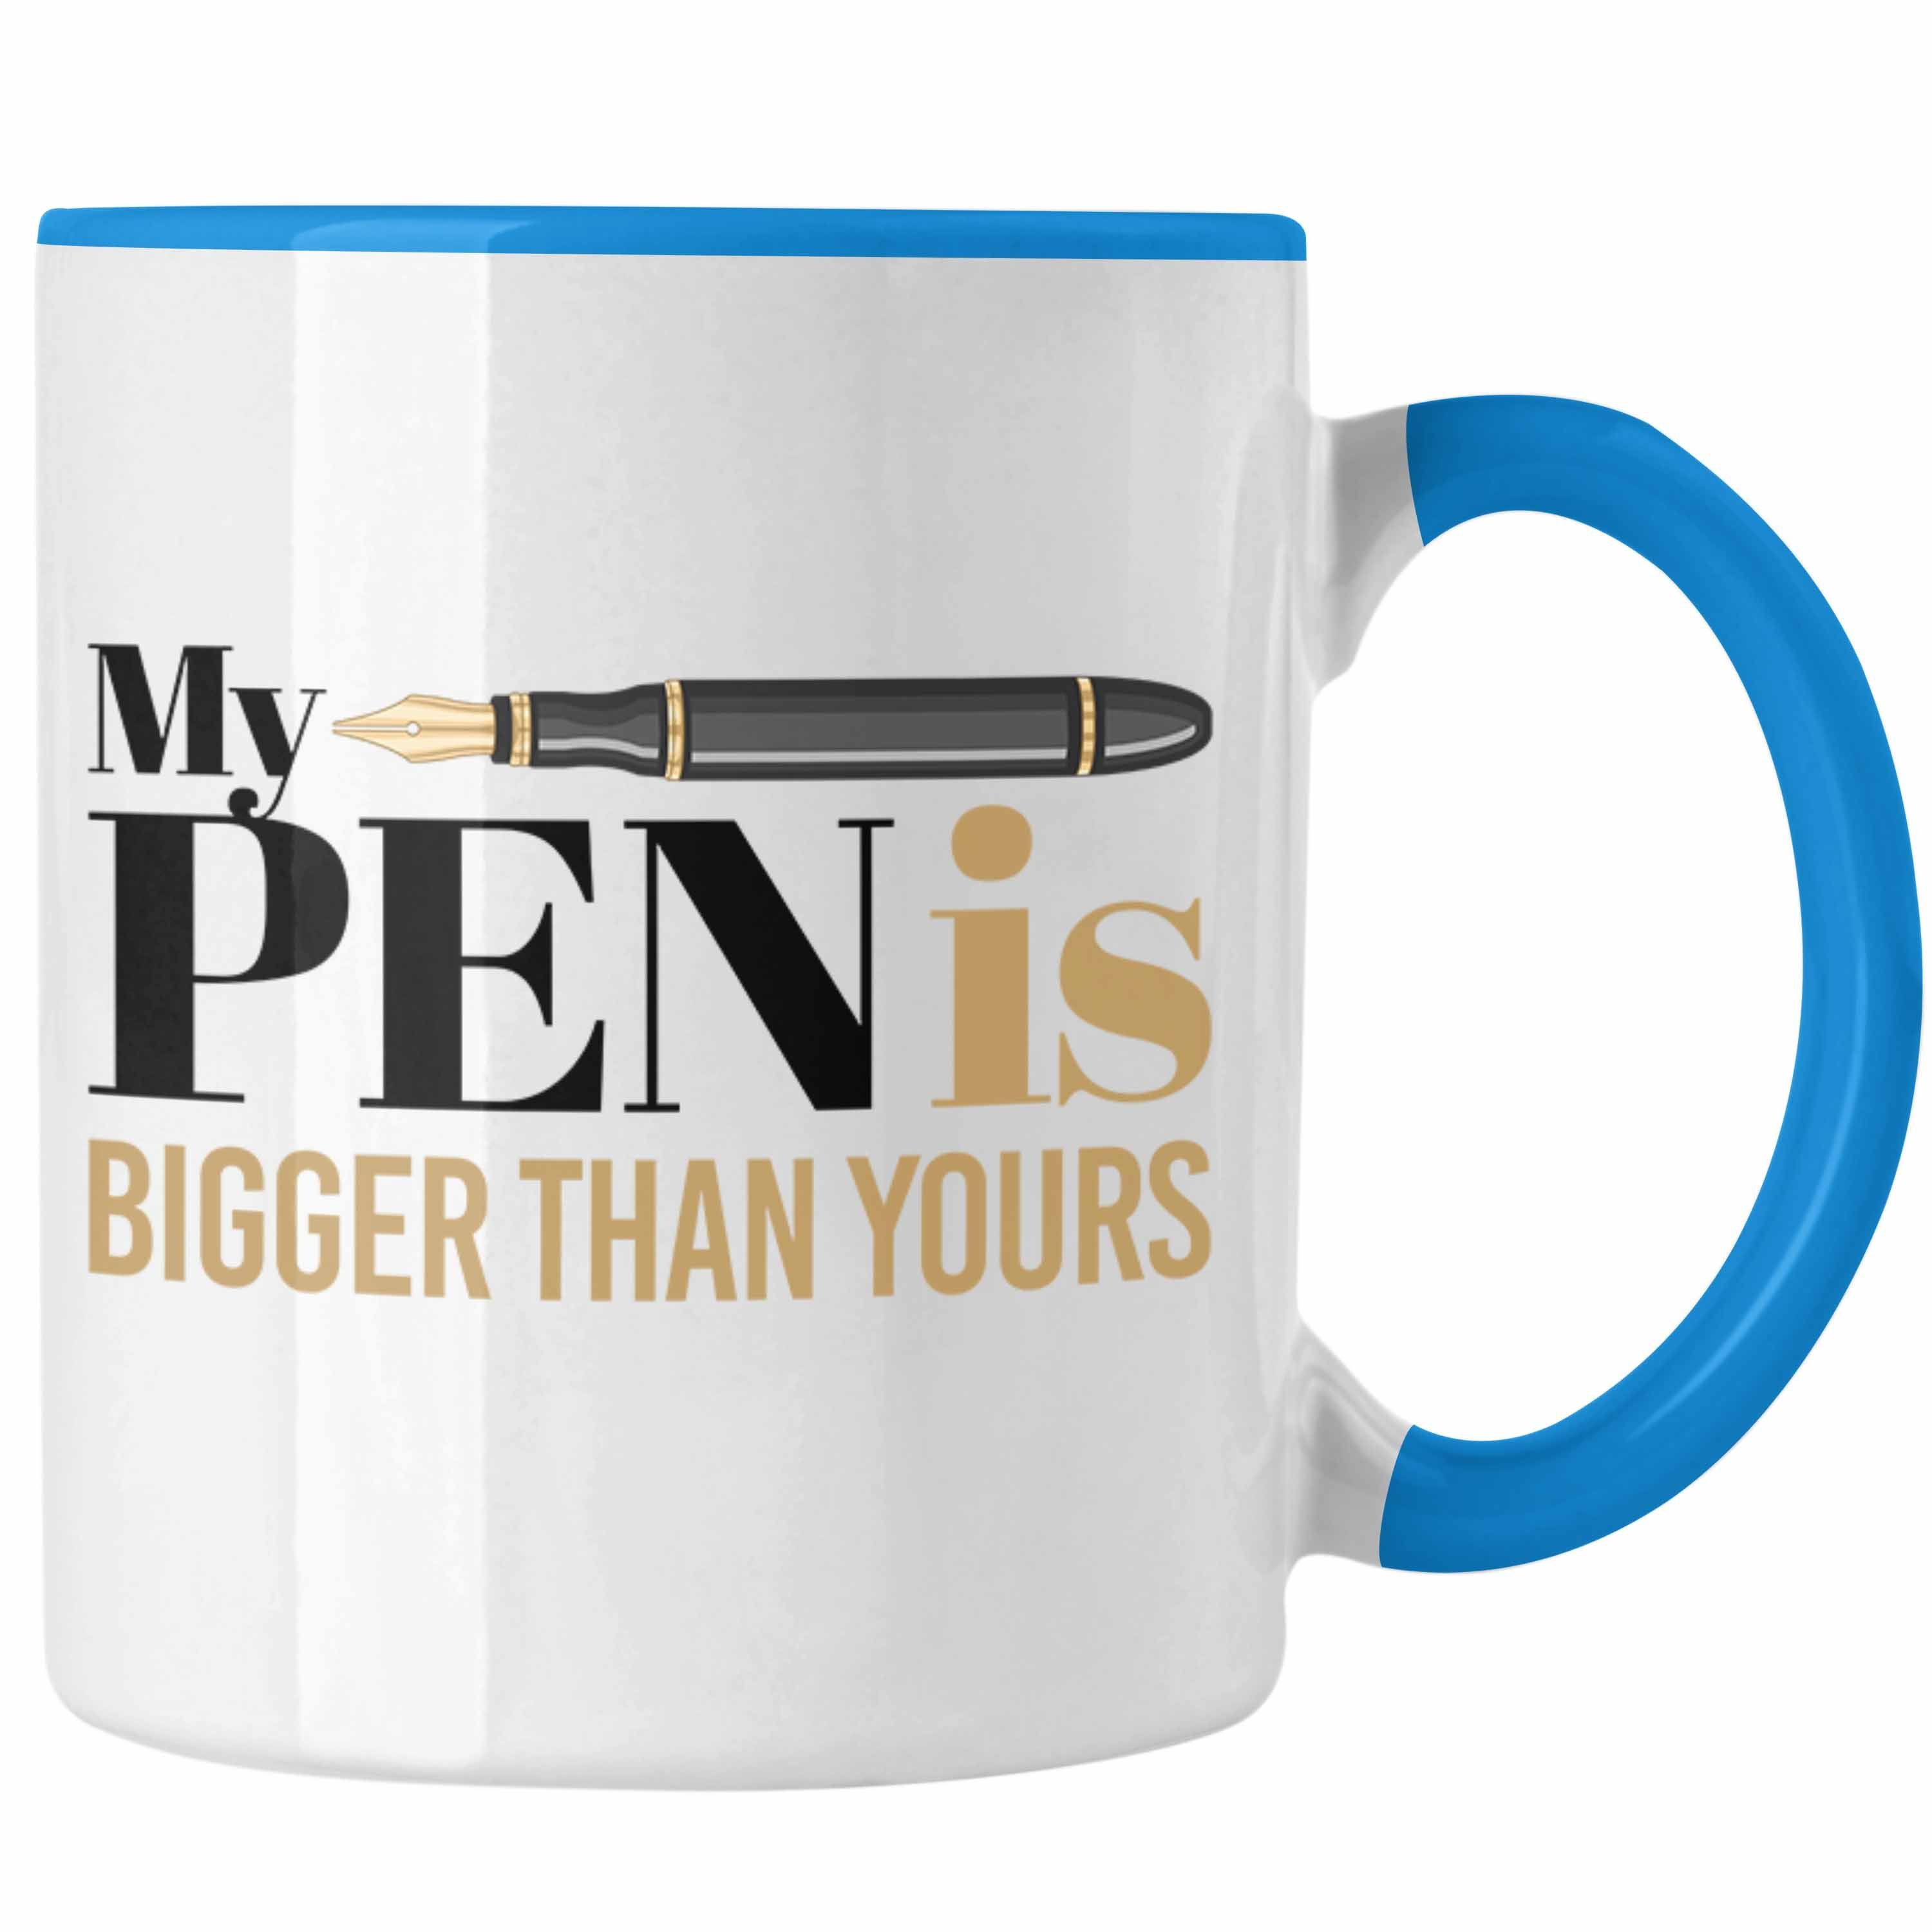 Trendation Tasse My Pen Is Bigger Than Your Tasse Geschenk Witziger Blau